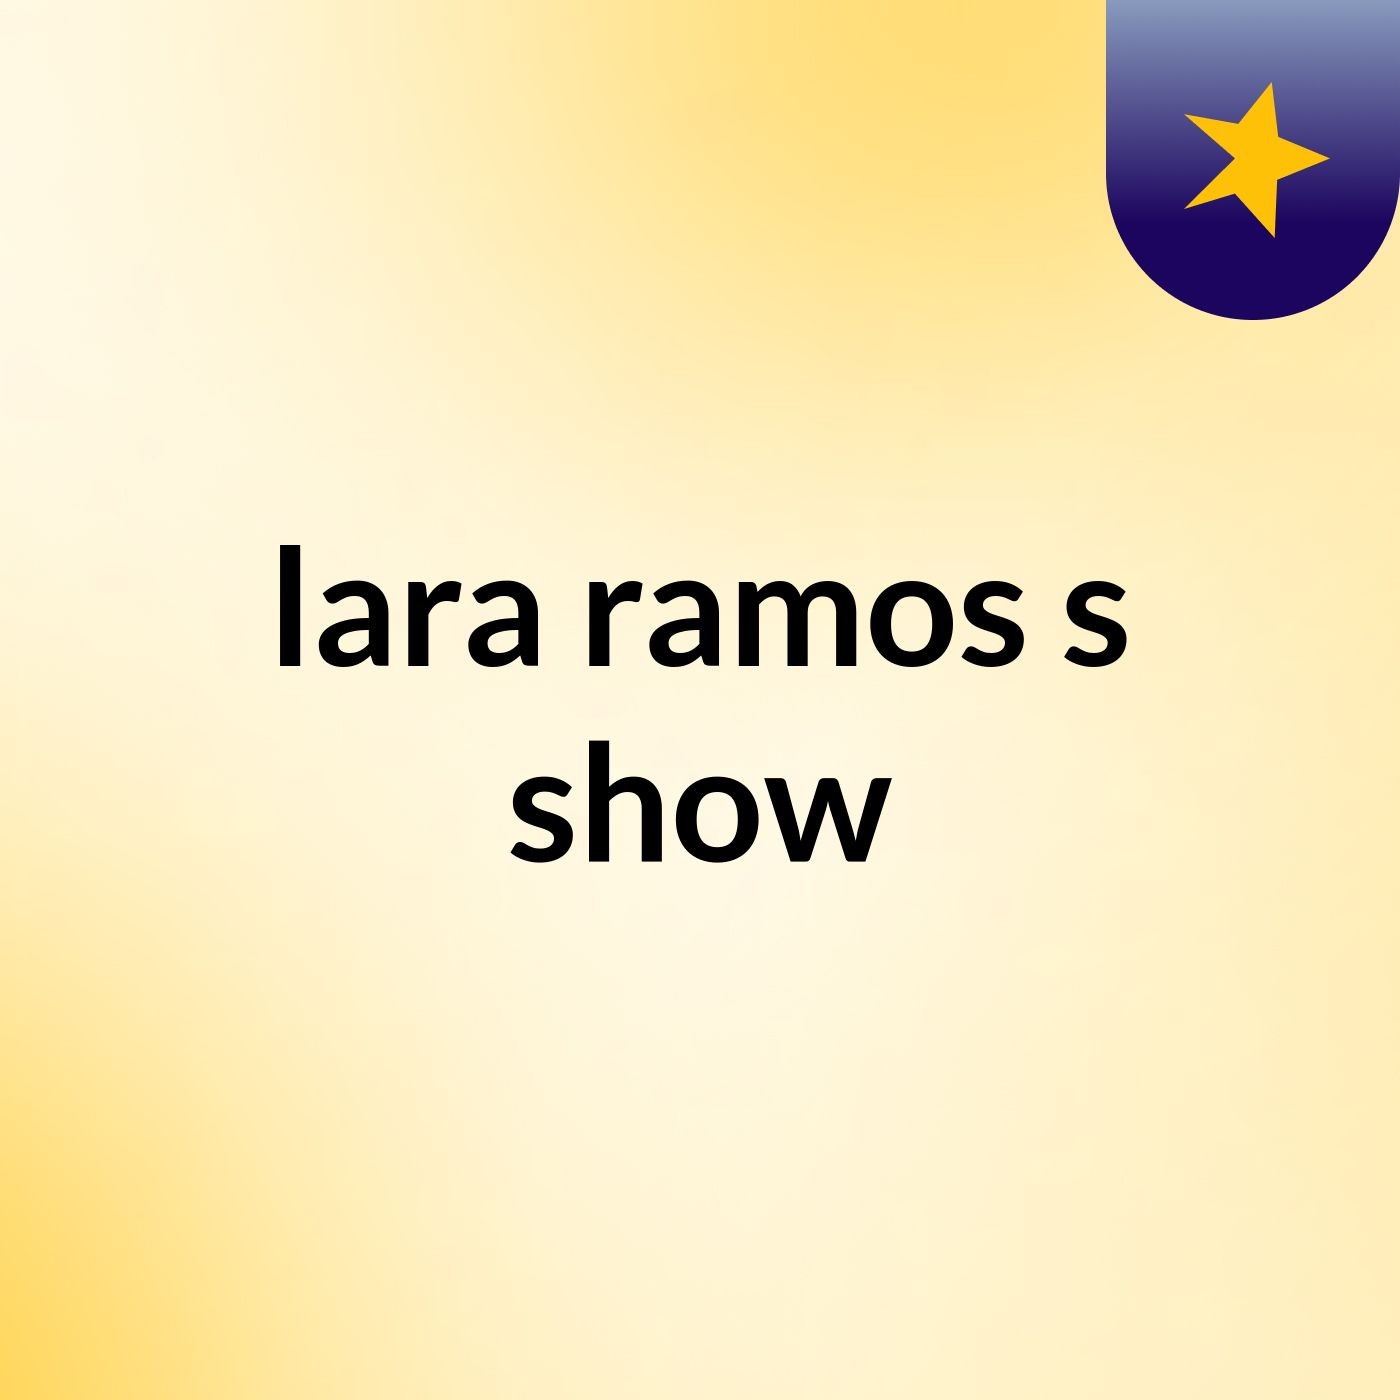 lara ramos's show